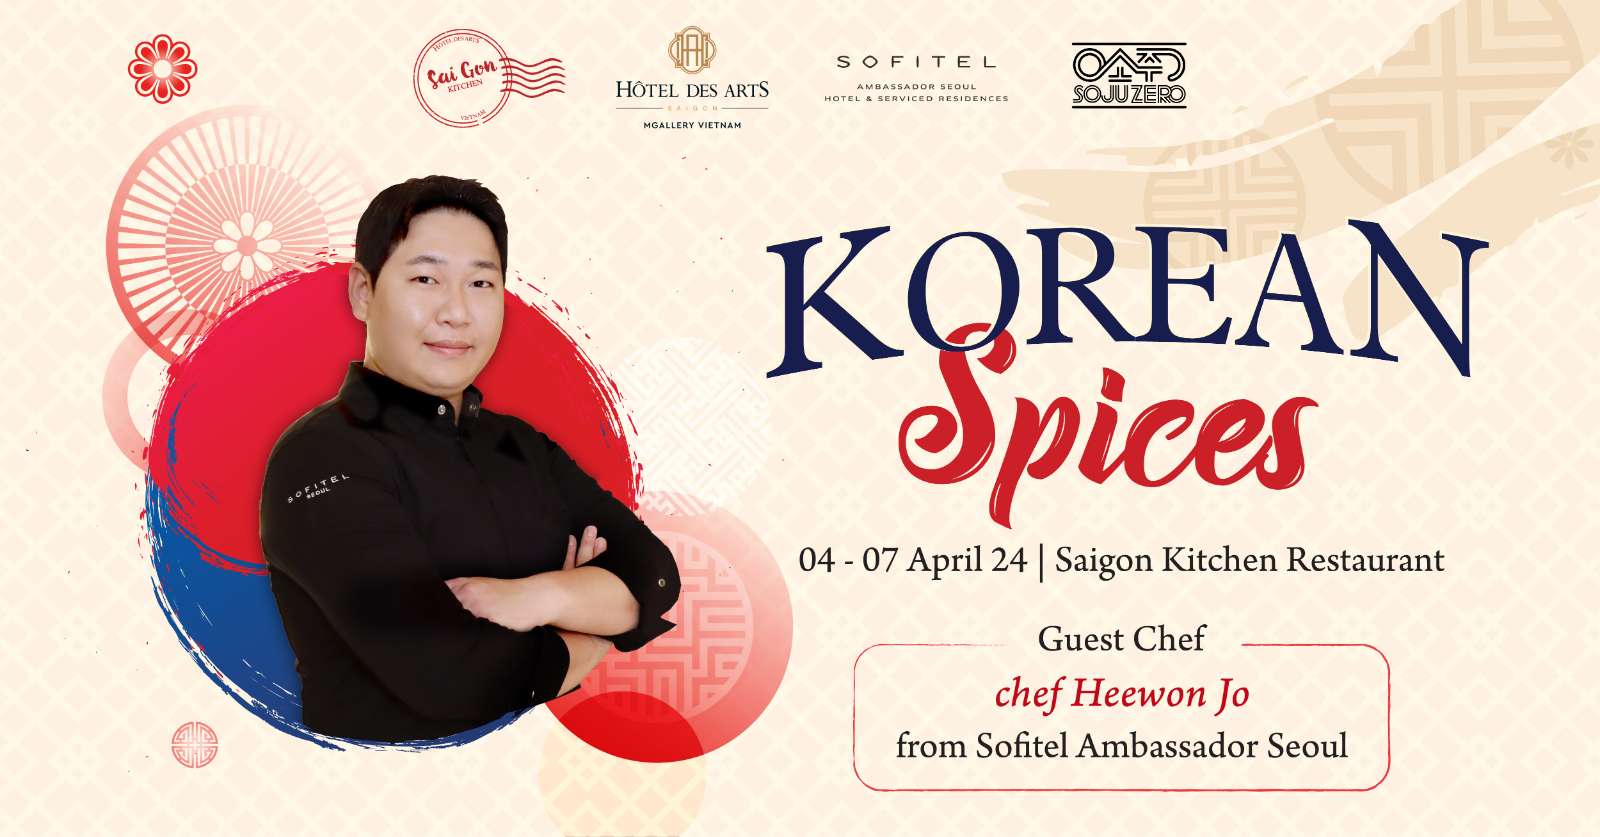 Korean Spices, Saigon Kitchen, ẩm thực Hàn Quốc, Hôtel des Arts Saigon 